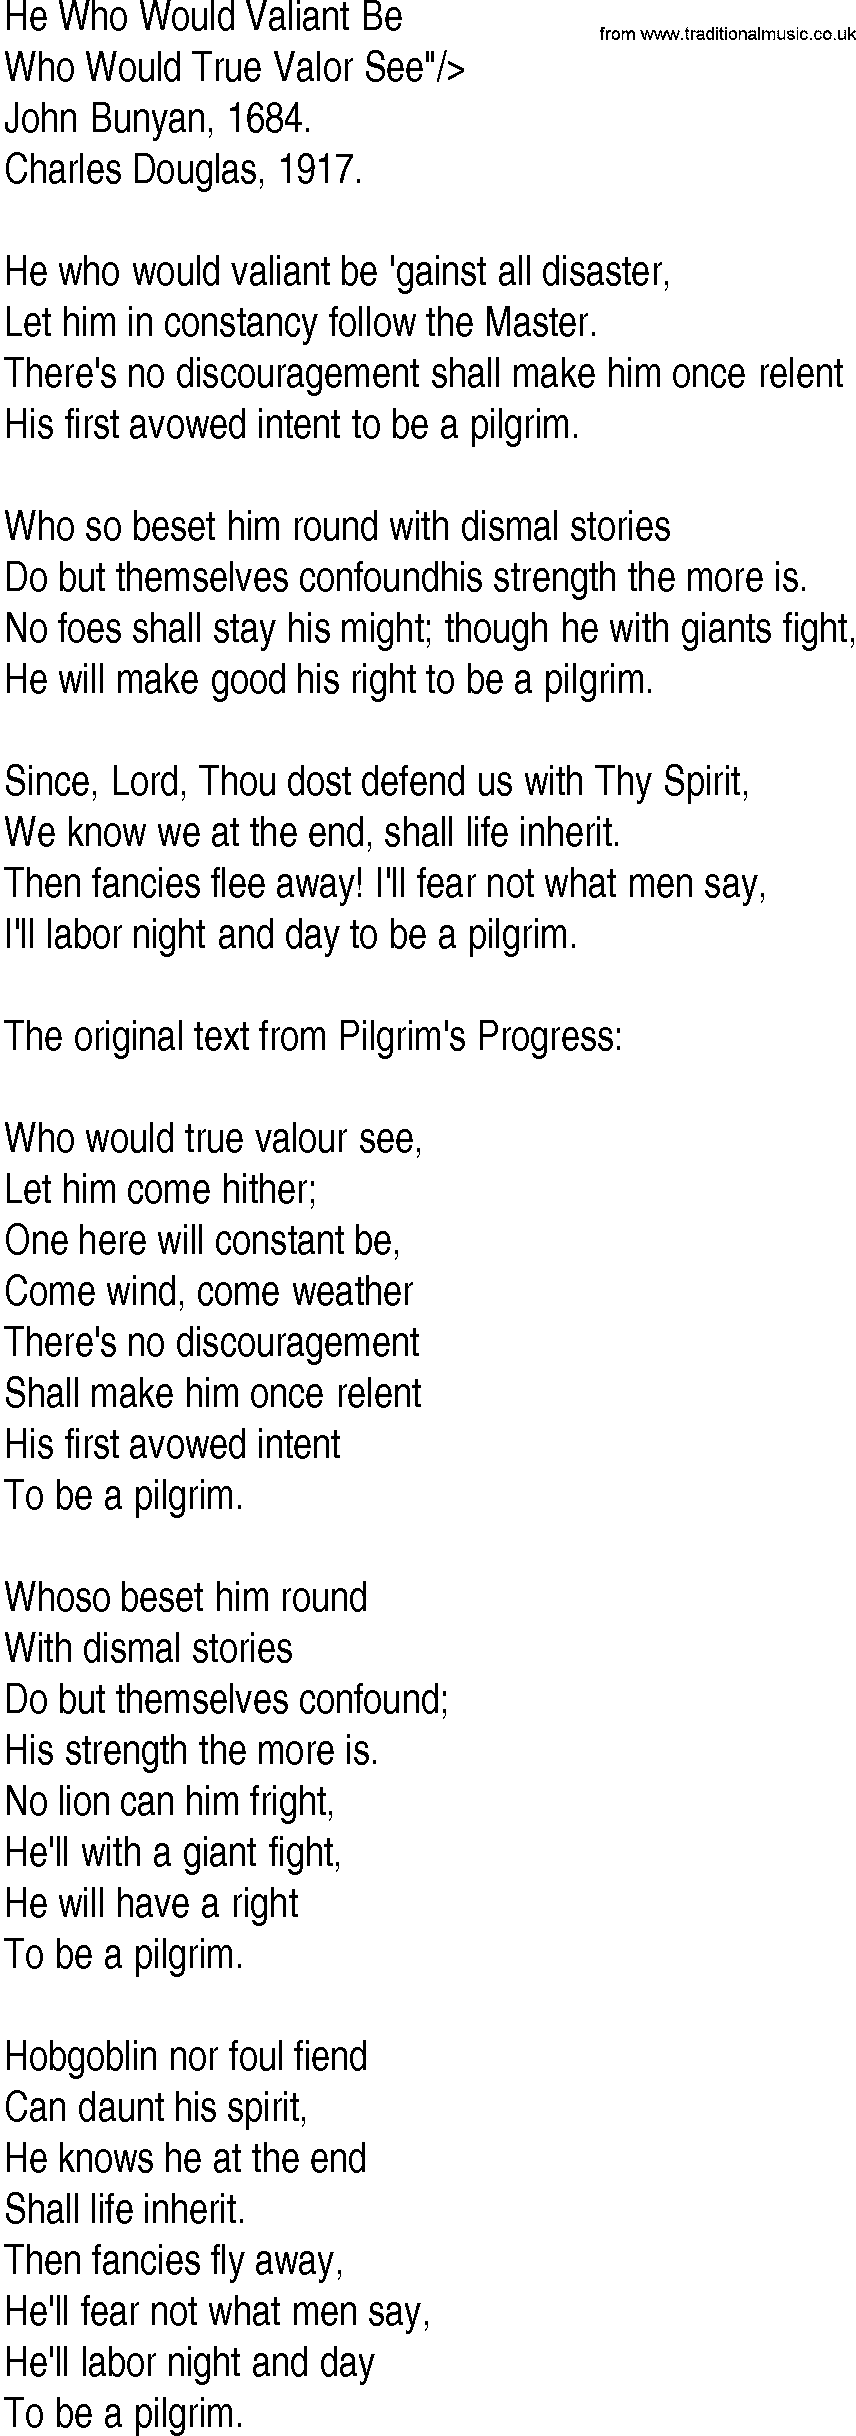 Hymn and Gospel Song: He Who Would Valiant Be by John Bunyan lyrics